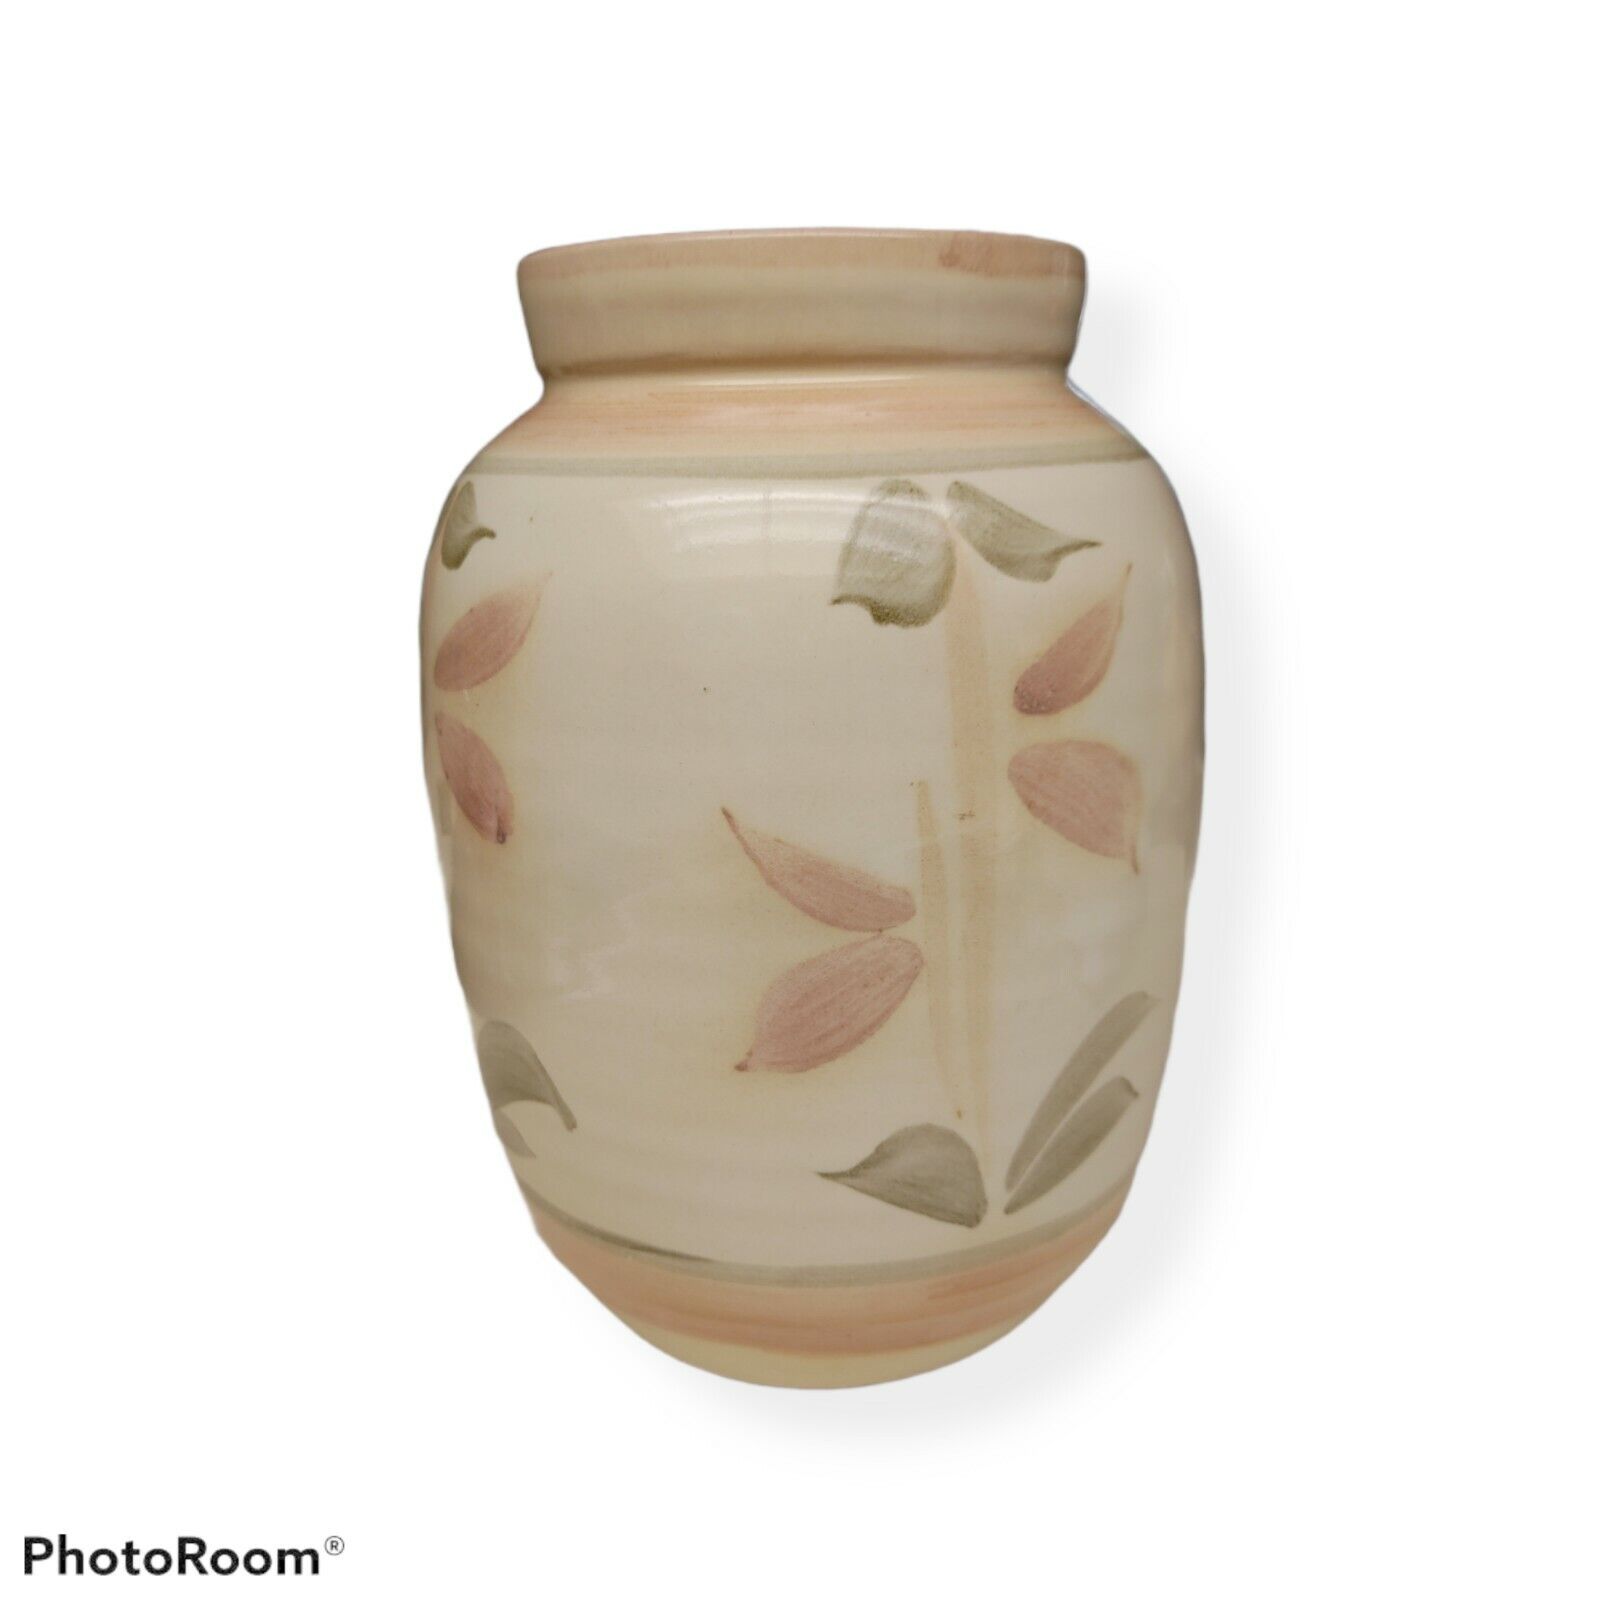 Vase Decorative Ceramic Vase Colorful Flowers Bowl Pottery Signed